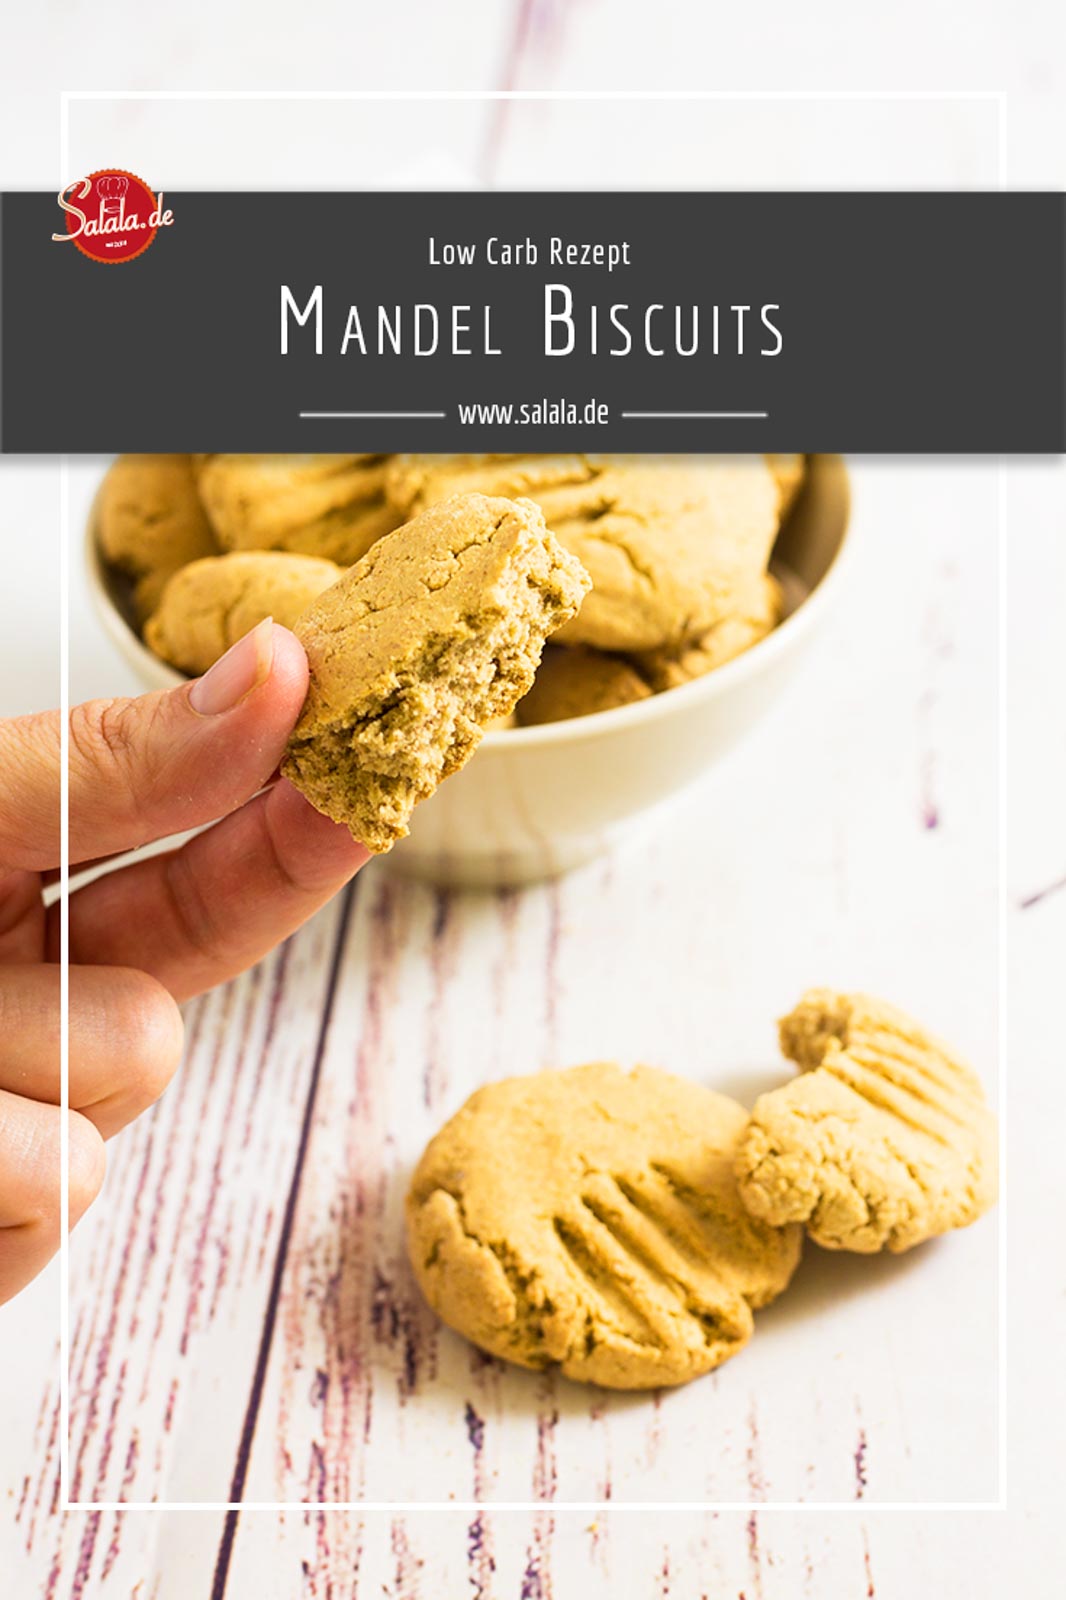 US Mandel Biscuits - by salala.de - Rezept Low Carb Beilage backen ohne Mehl #lowcarb #keto #mehlfrei #backen